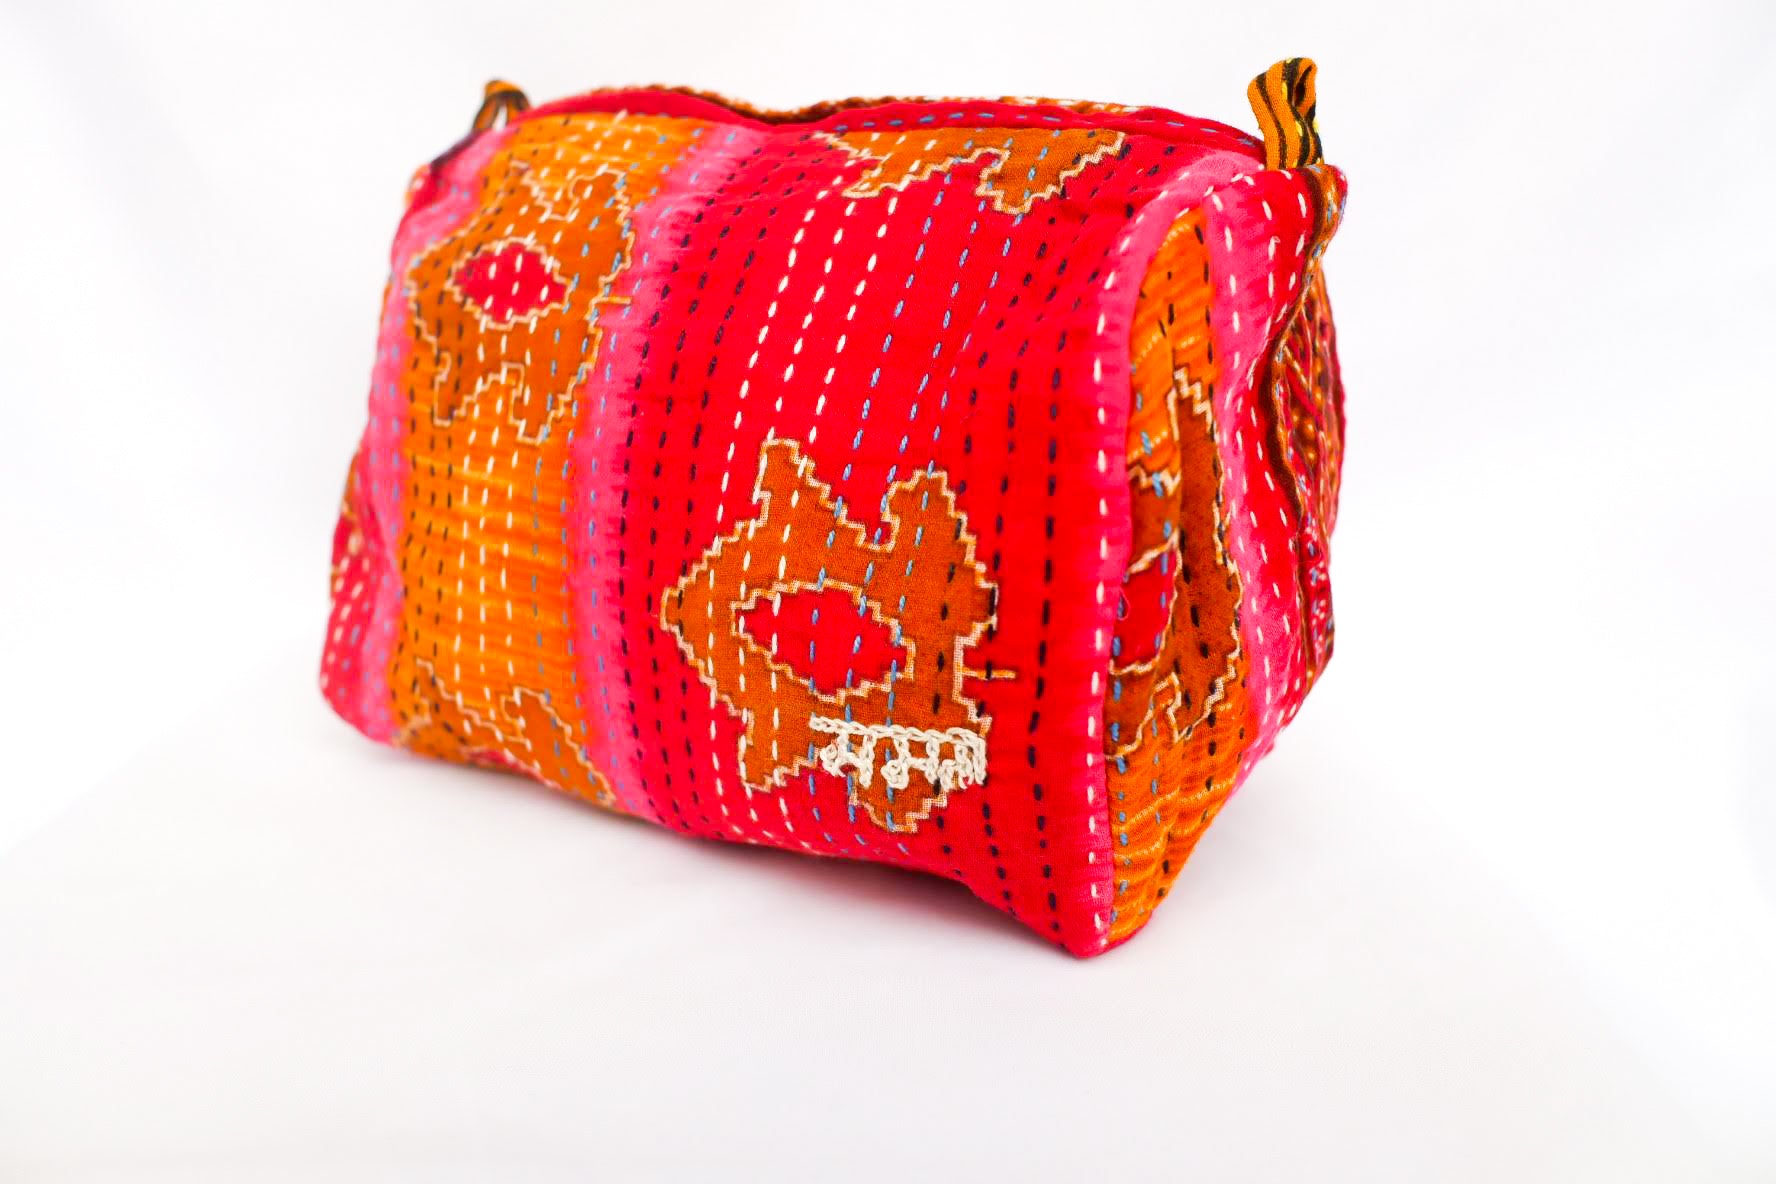 Large kantha-stitch makeup pouch